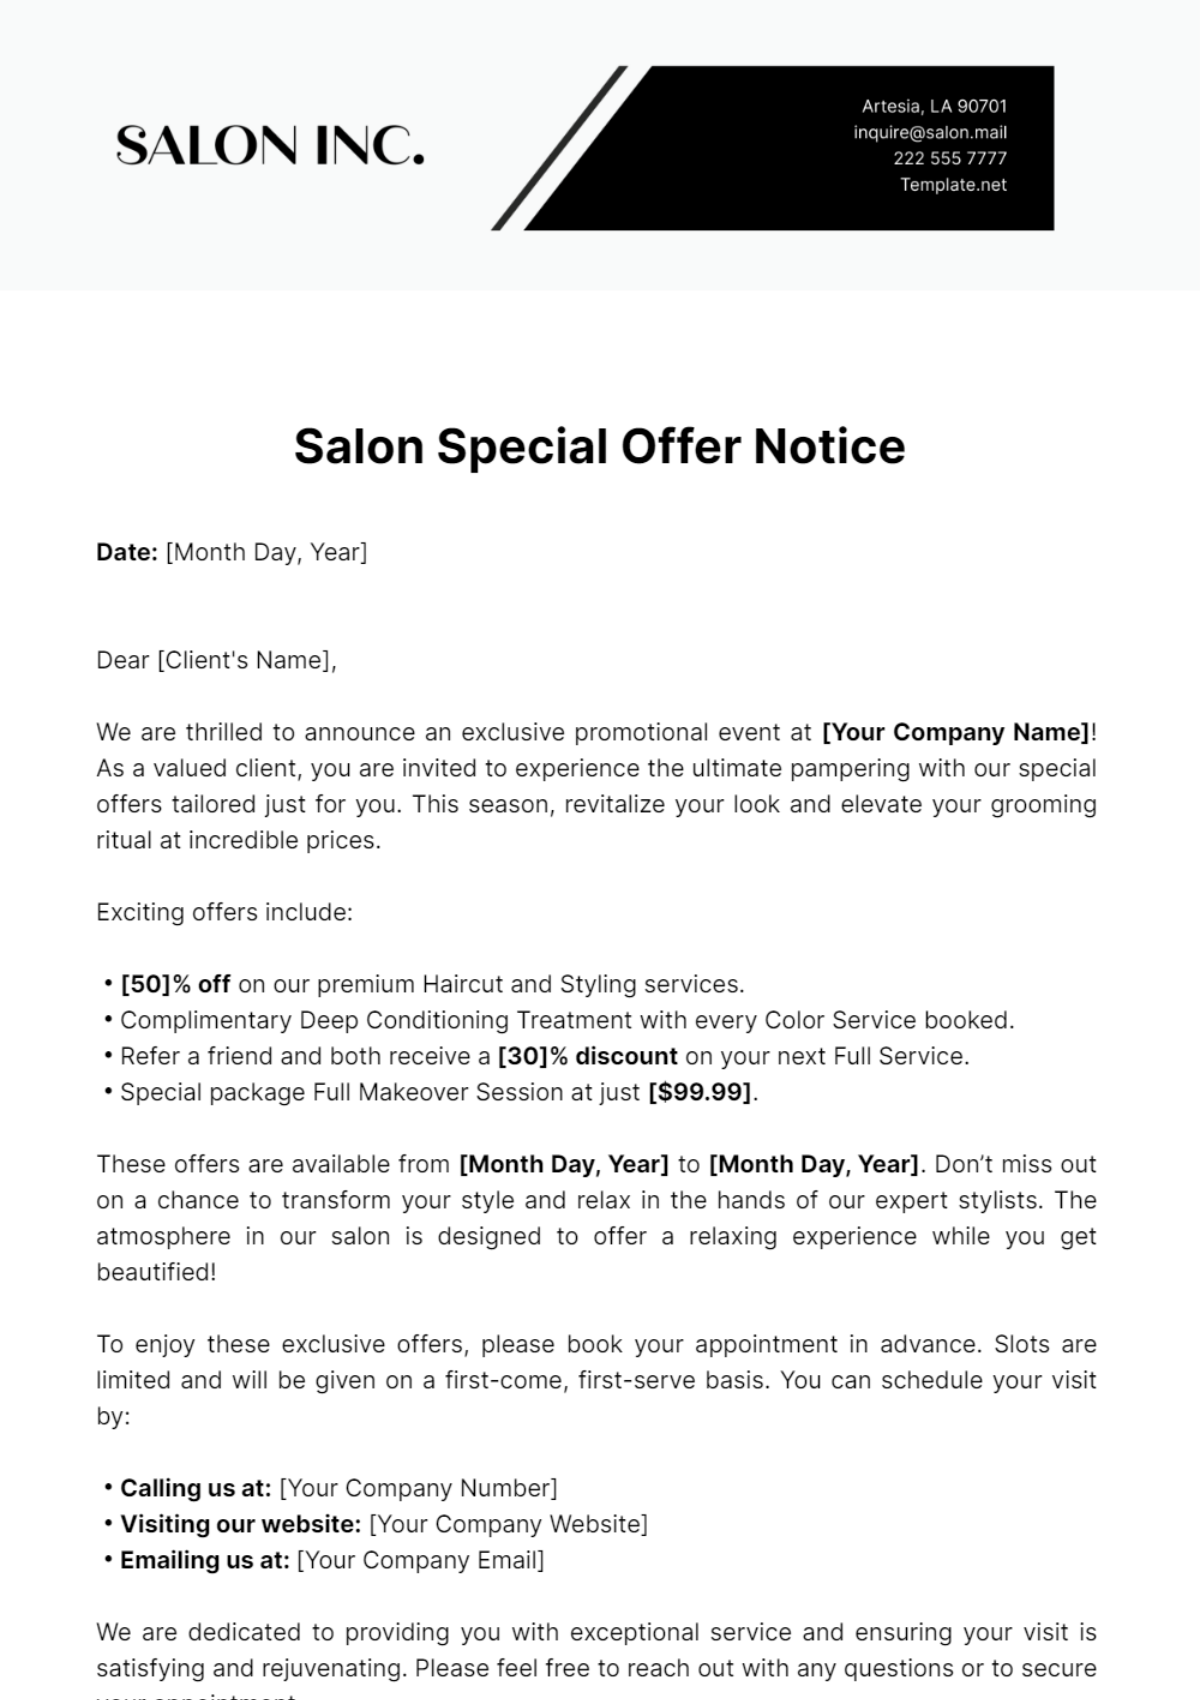 Salon Special Offer Notice Template